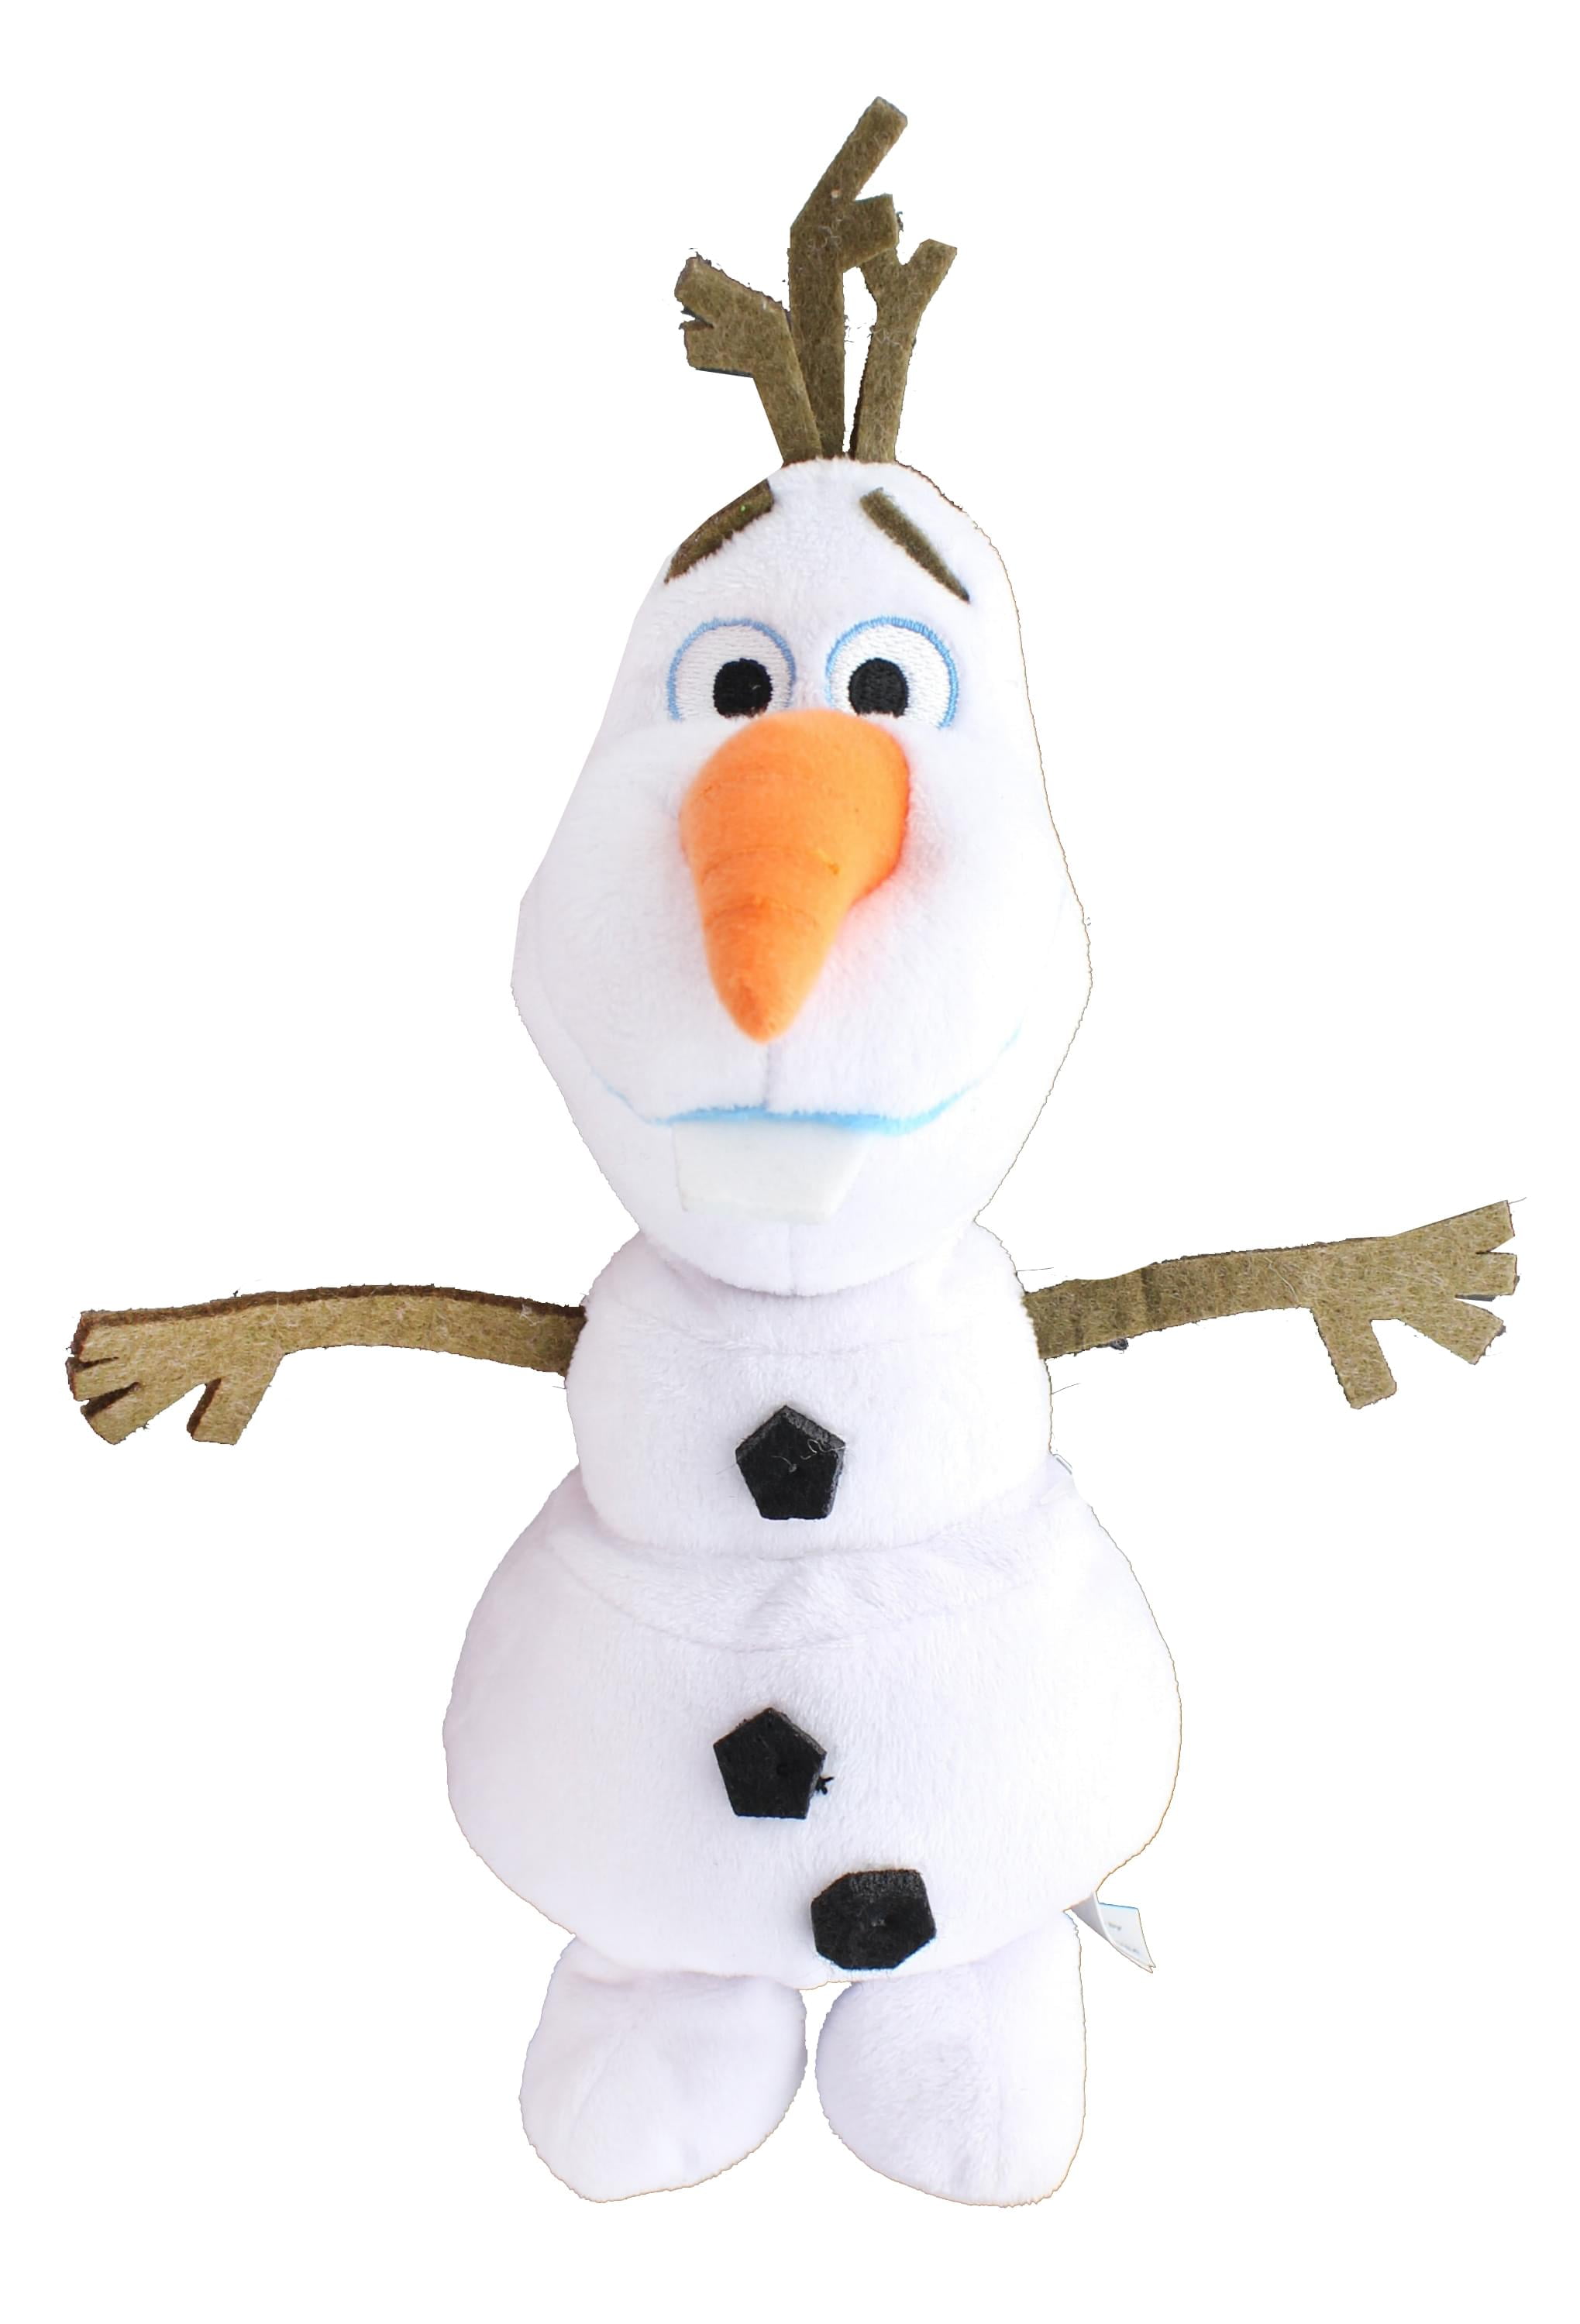 Overleving twintig Appal Frozen Talking Olaf Plush - Walmart.com